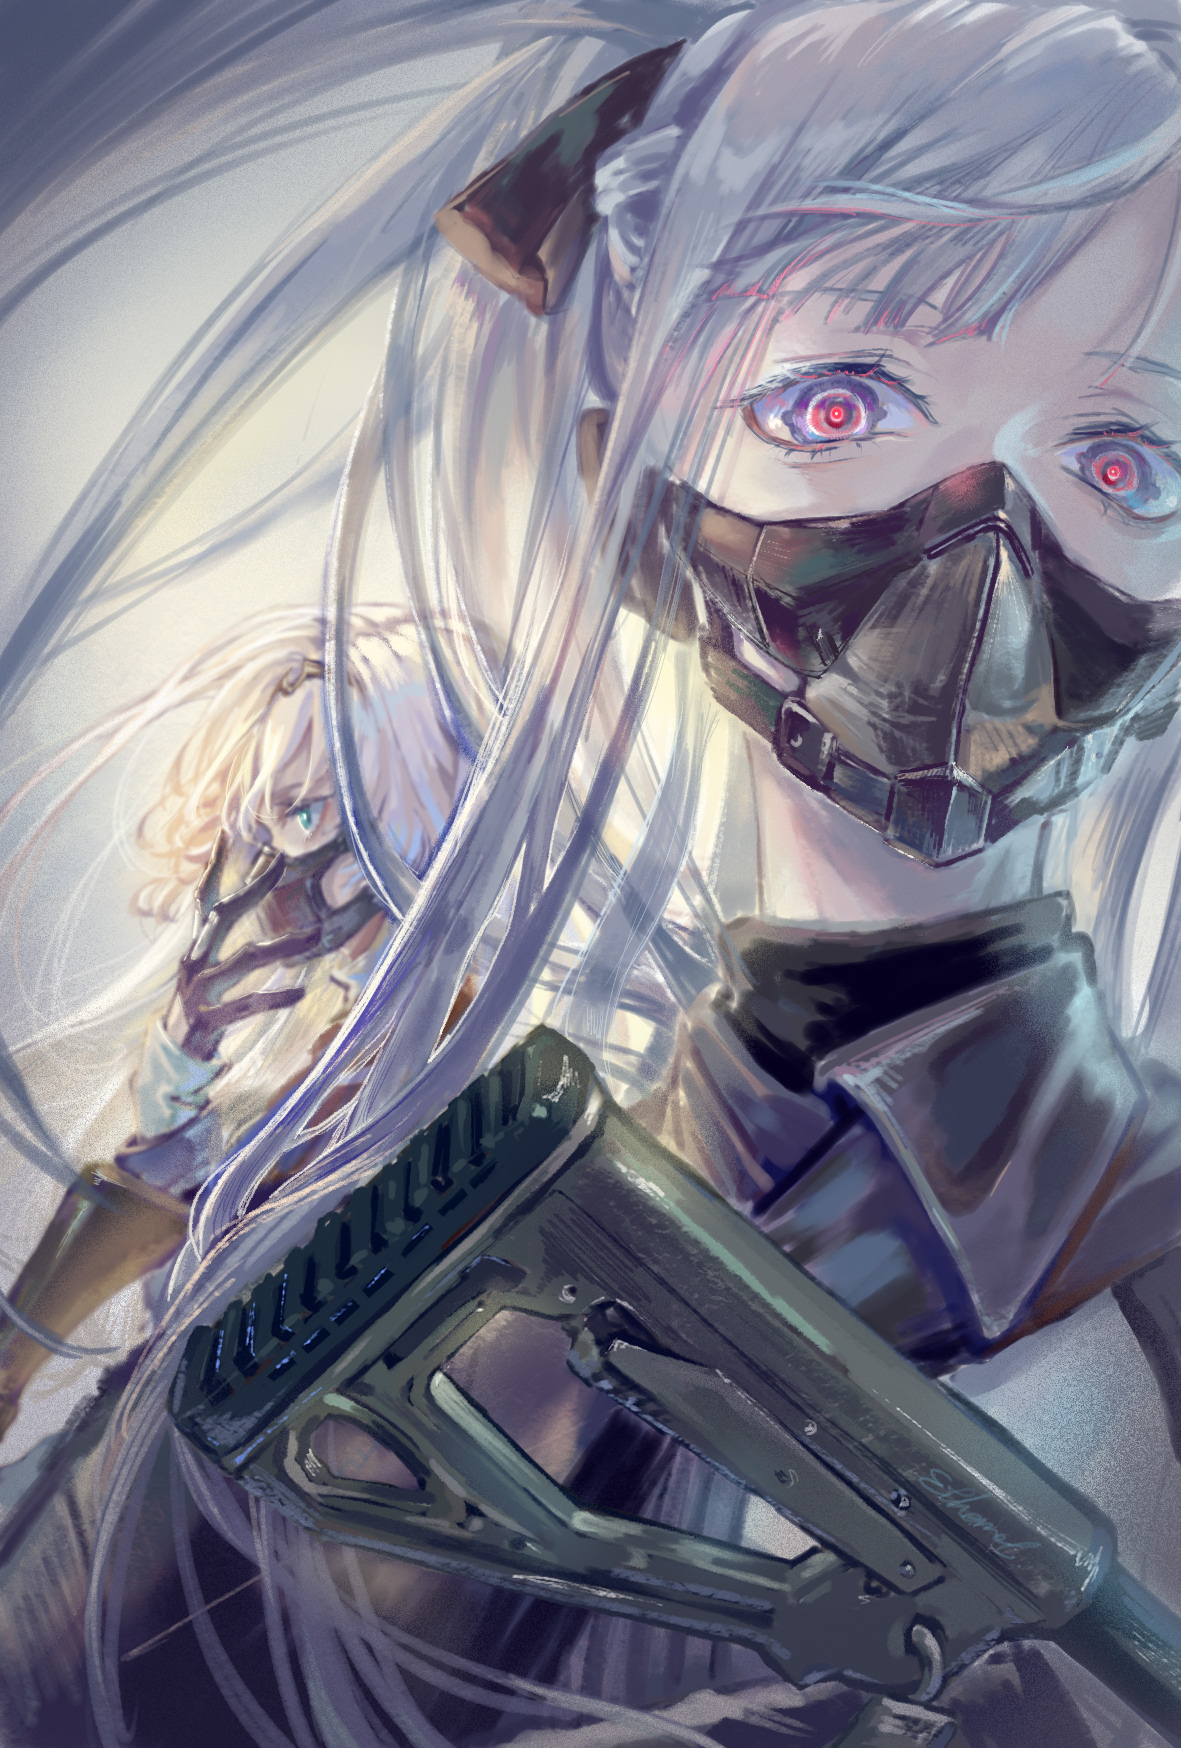 Girls' Frontline AN-94, AK-12